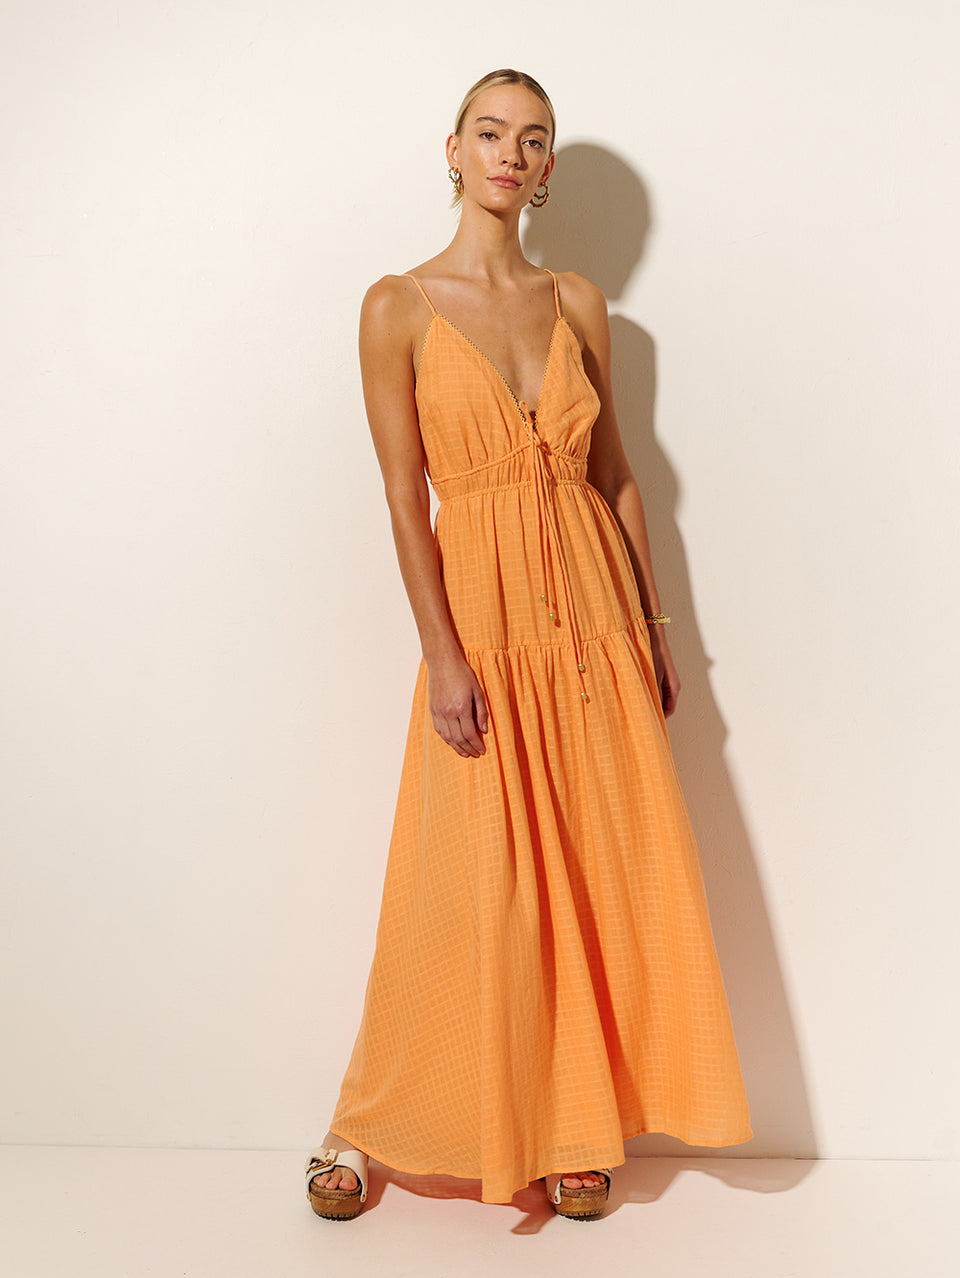 KIVARI Chantelle Maxi Dress | Model wears Peach Maxi Dress